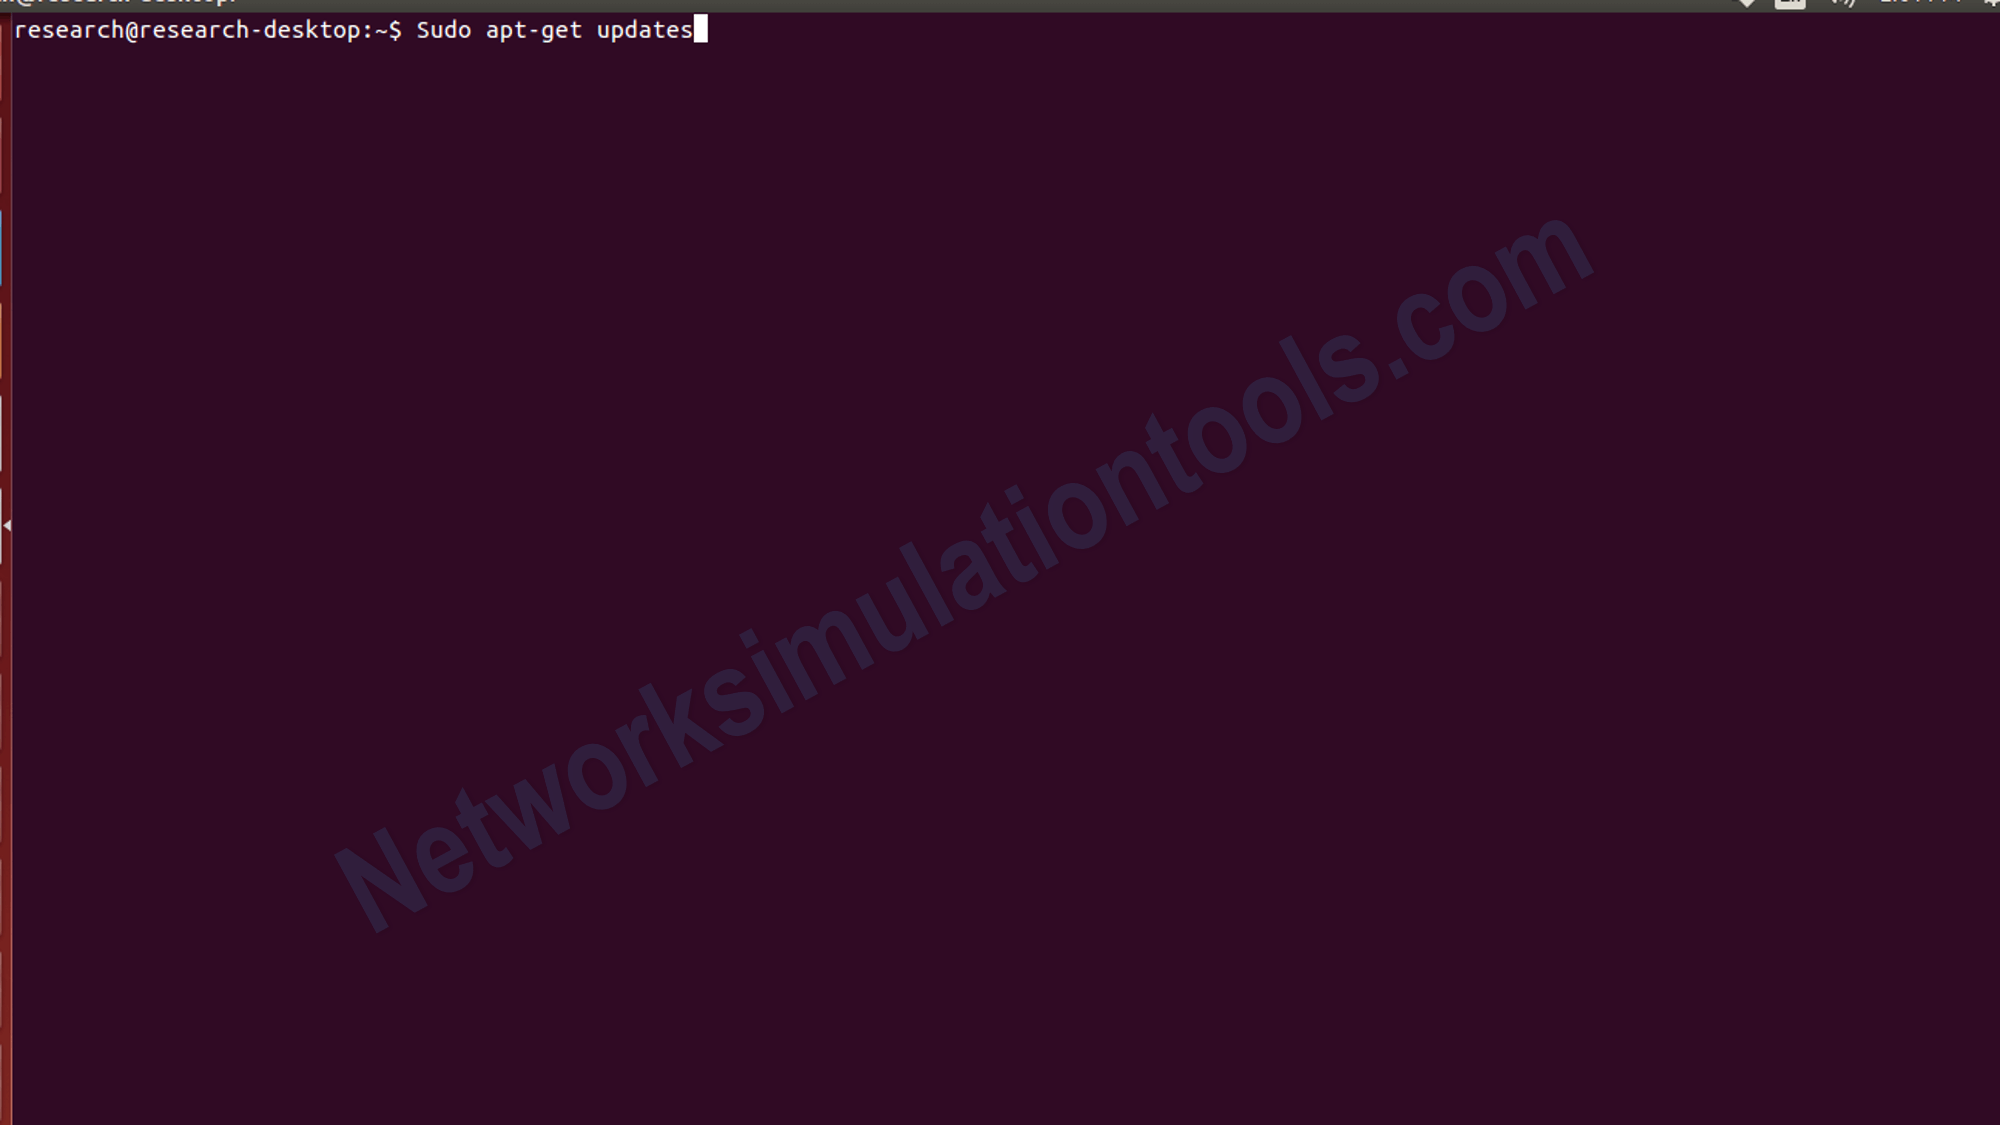 Installation of Virtual machine / Ubuntu 16.04 LTS